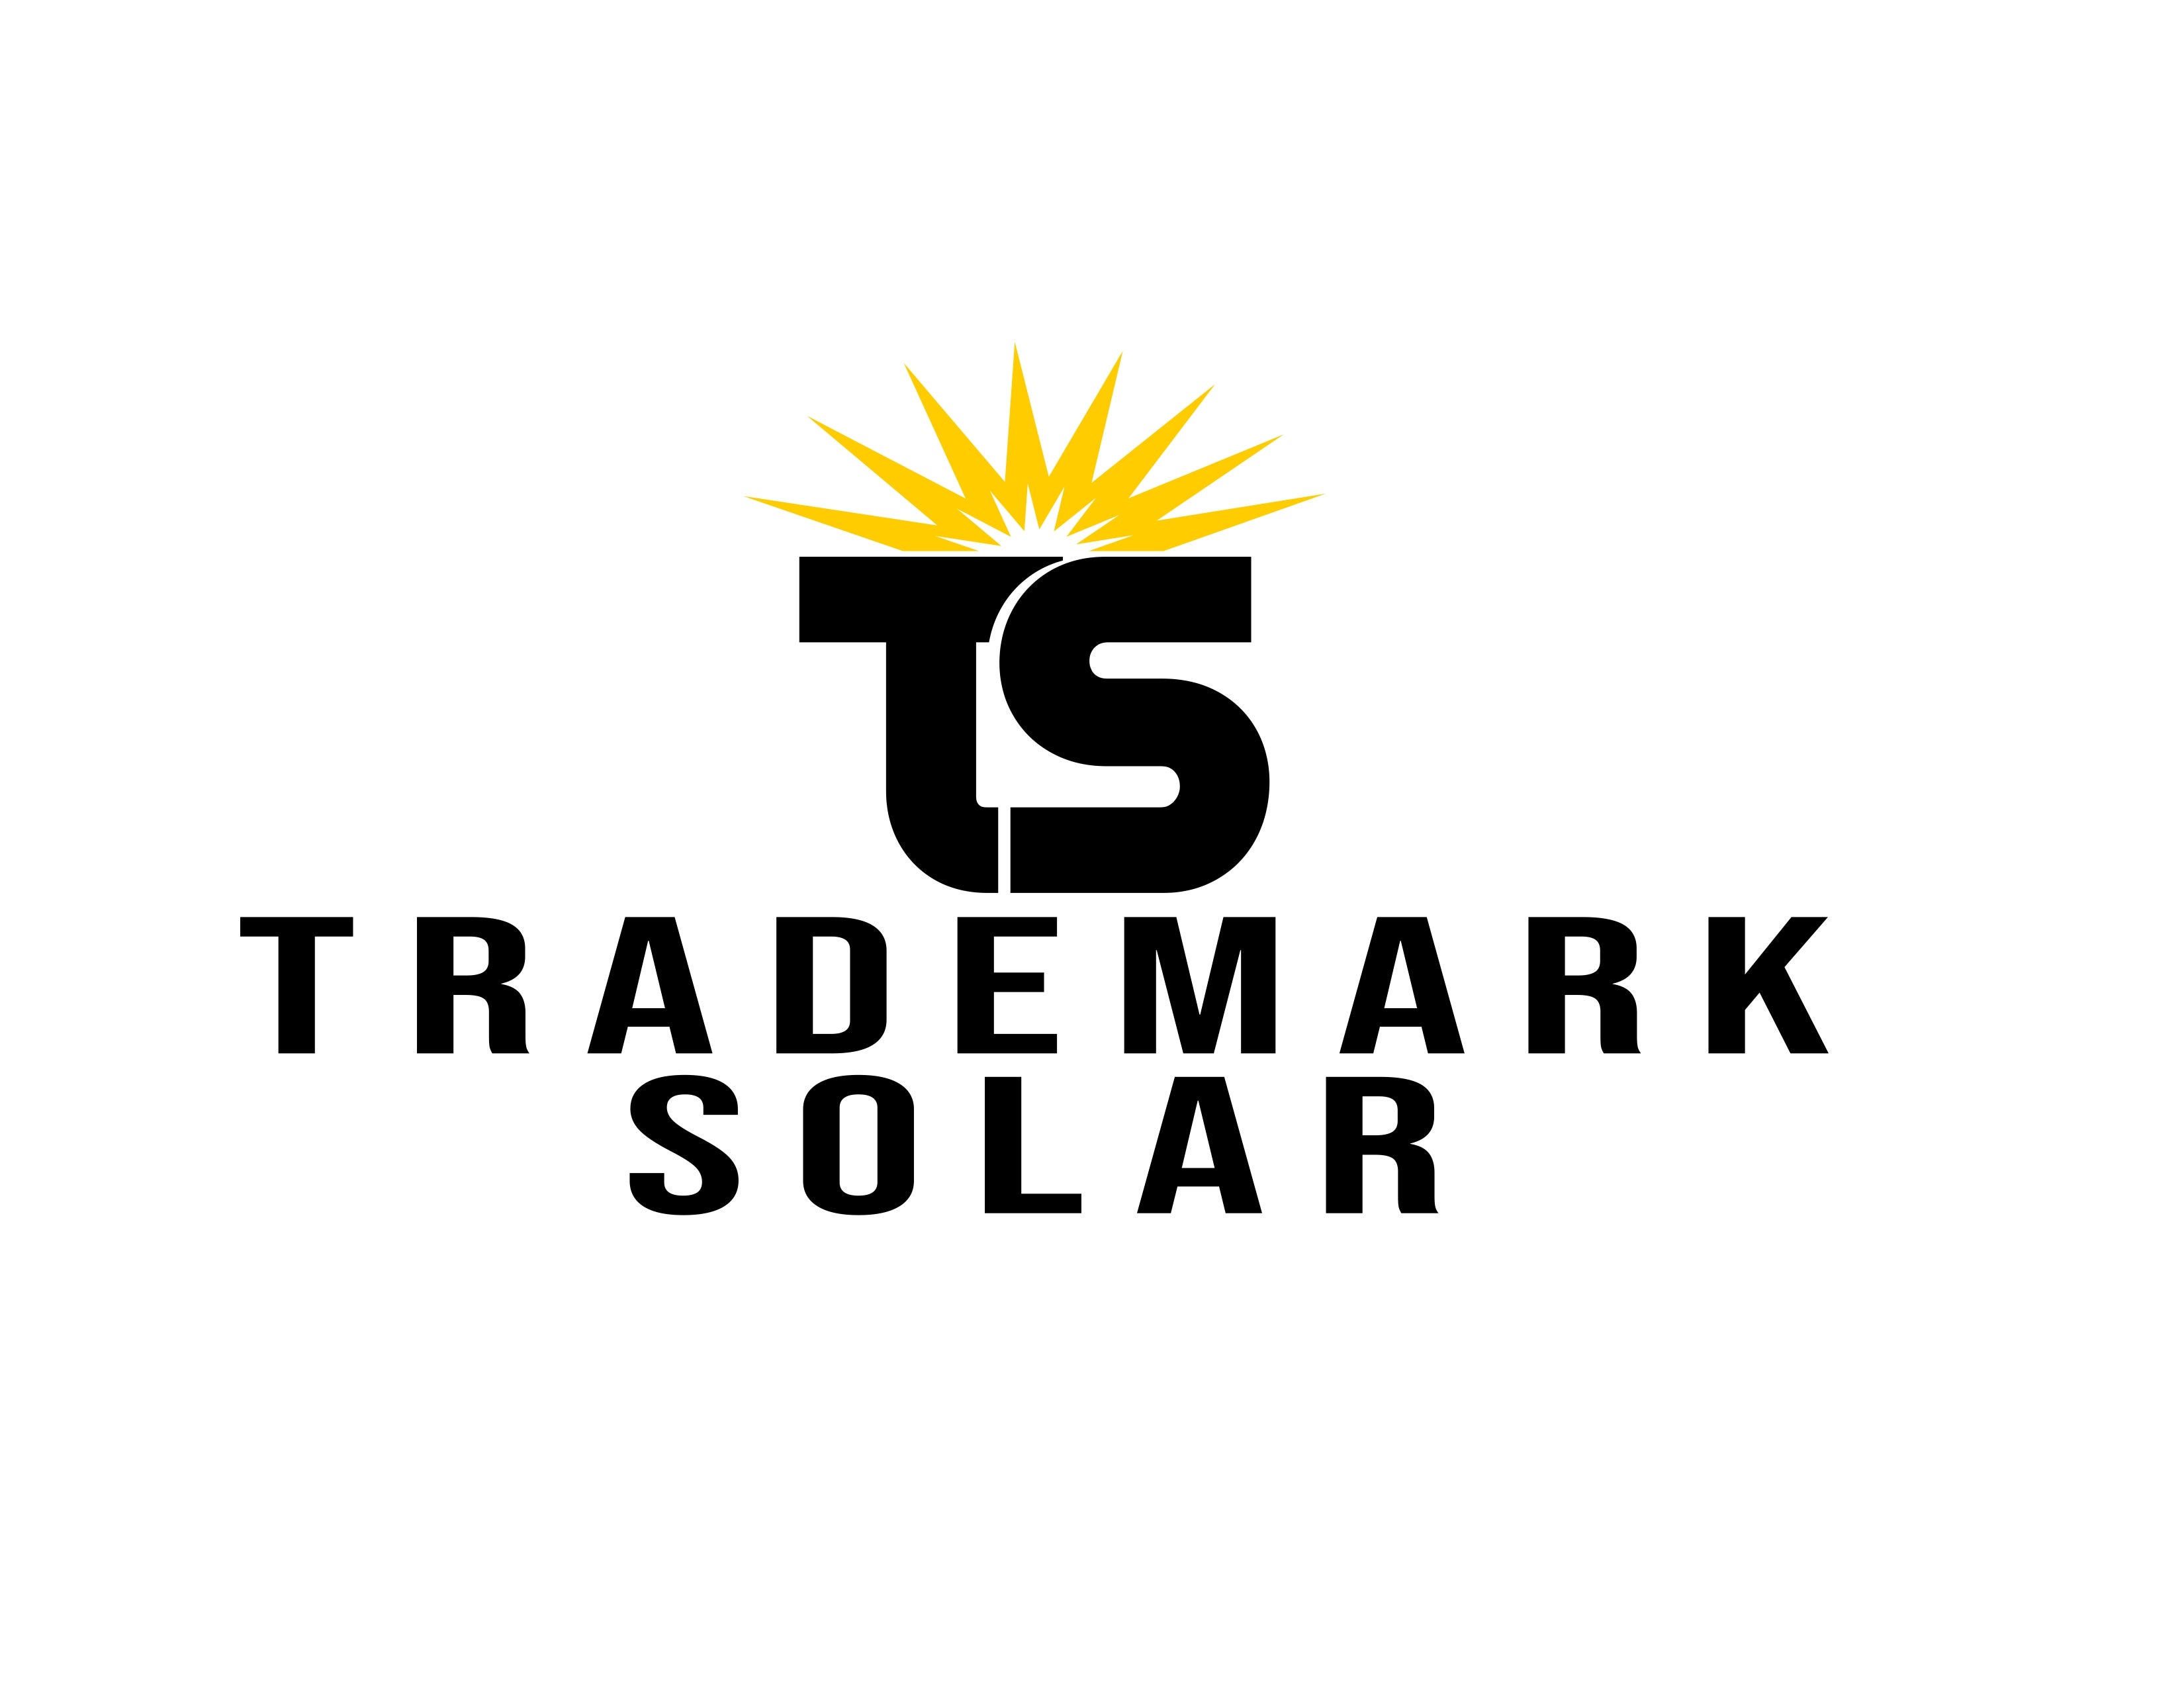 Trademark Solar Inc logo